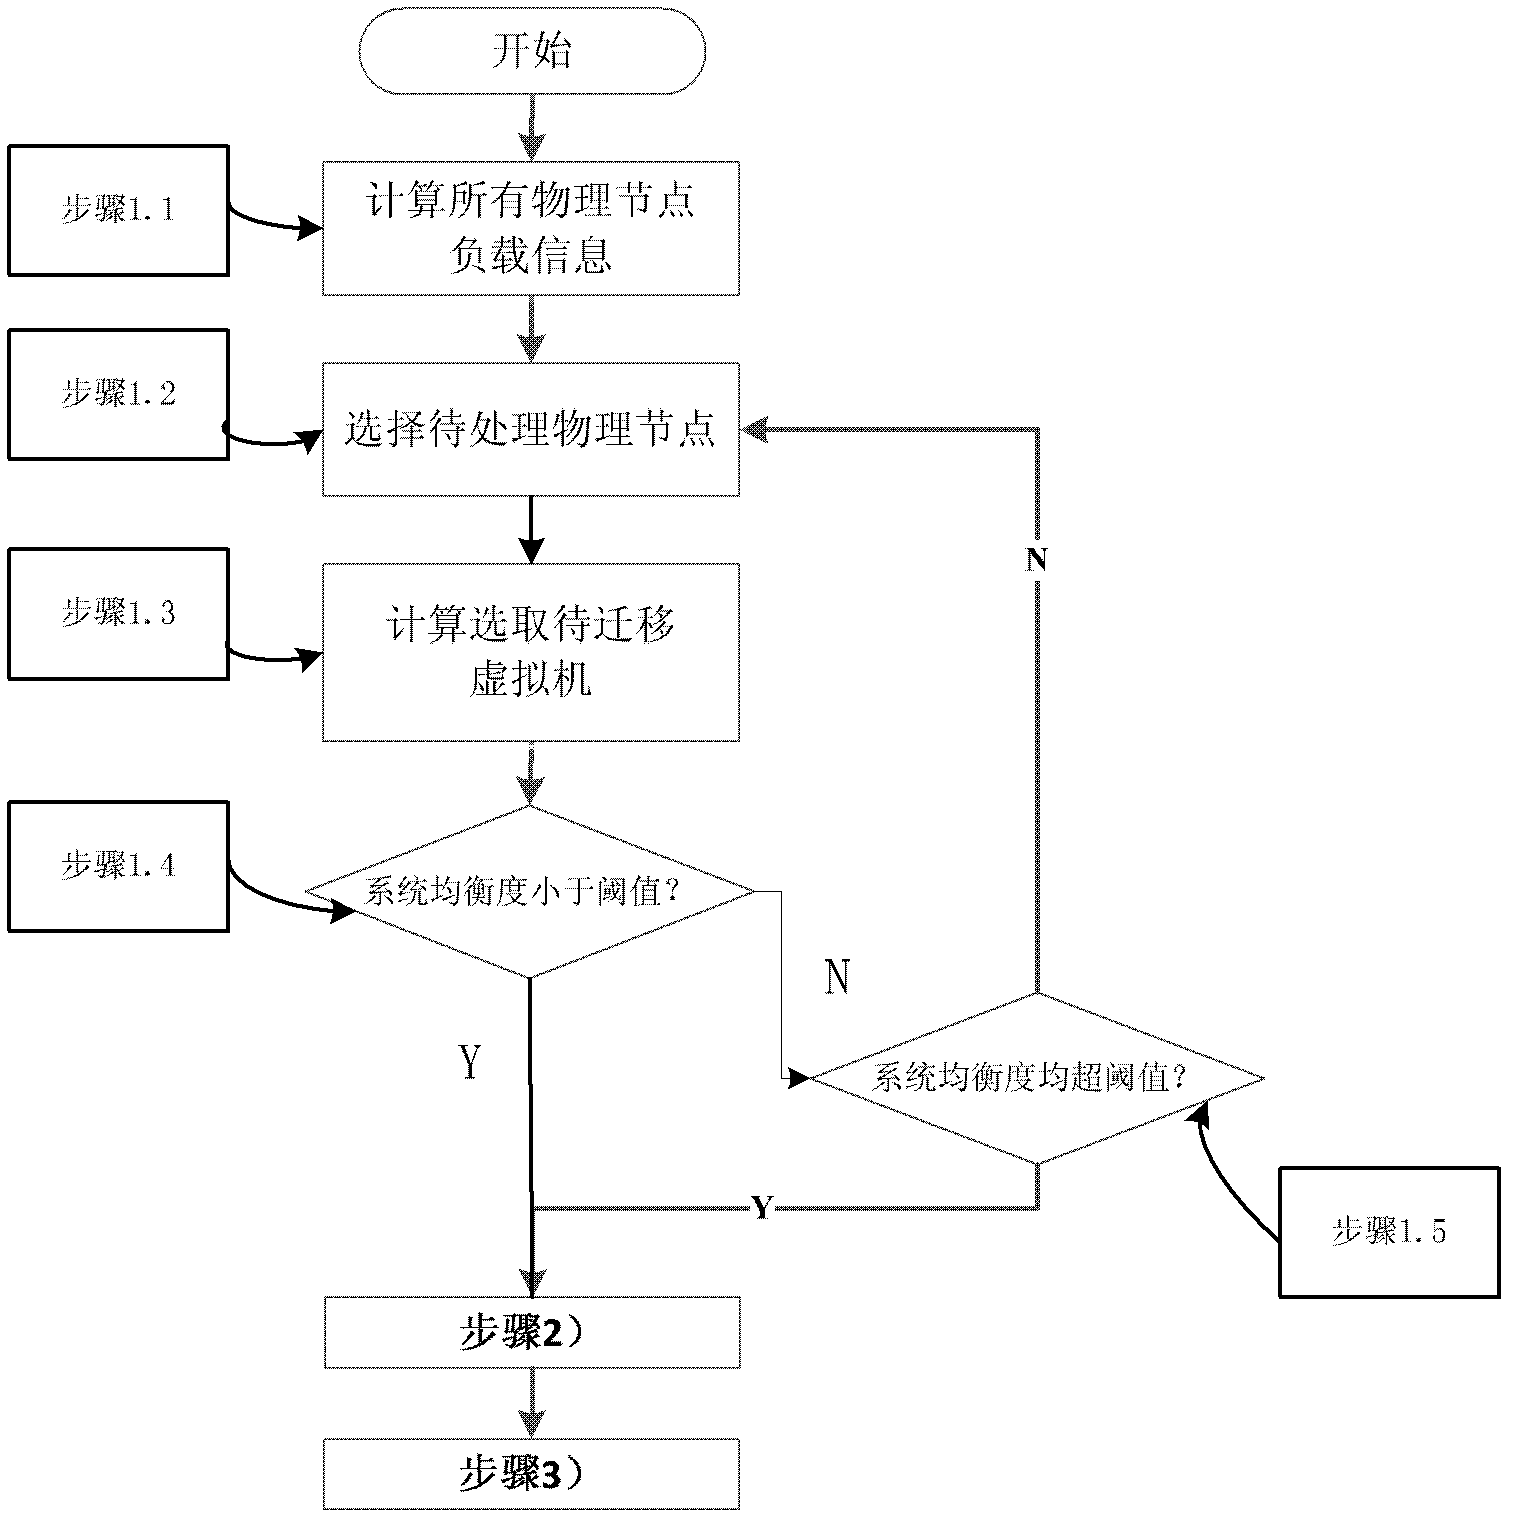 Load balancing method based on vector mapping